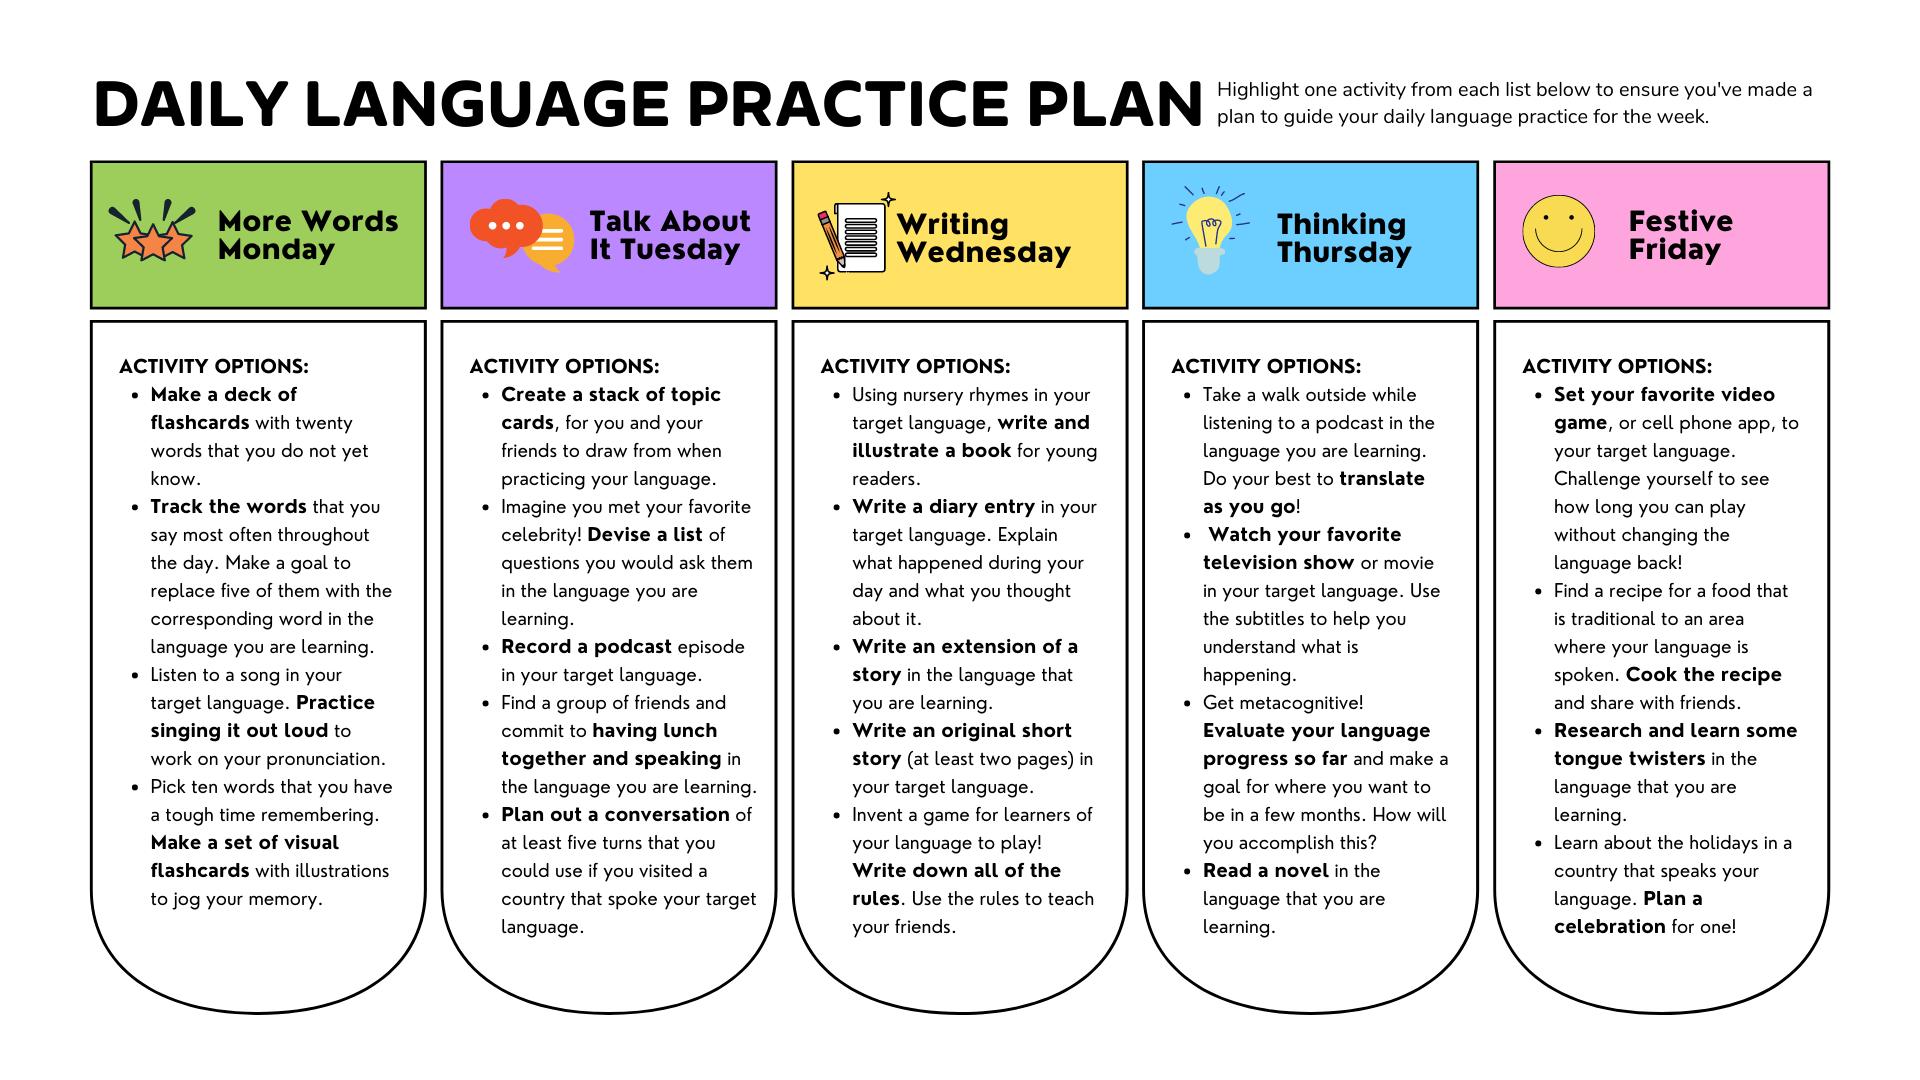 D4S_Daily_Language_Practice_Plan.png